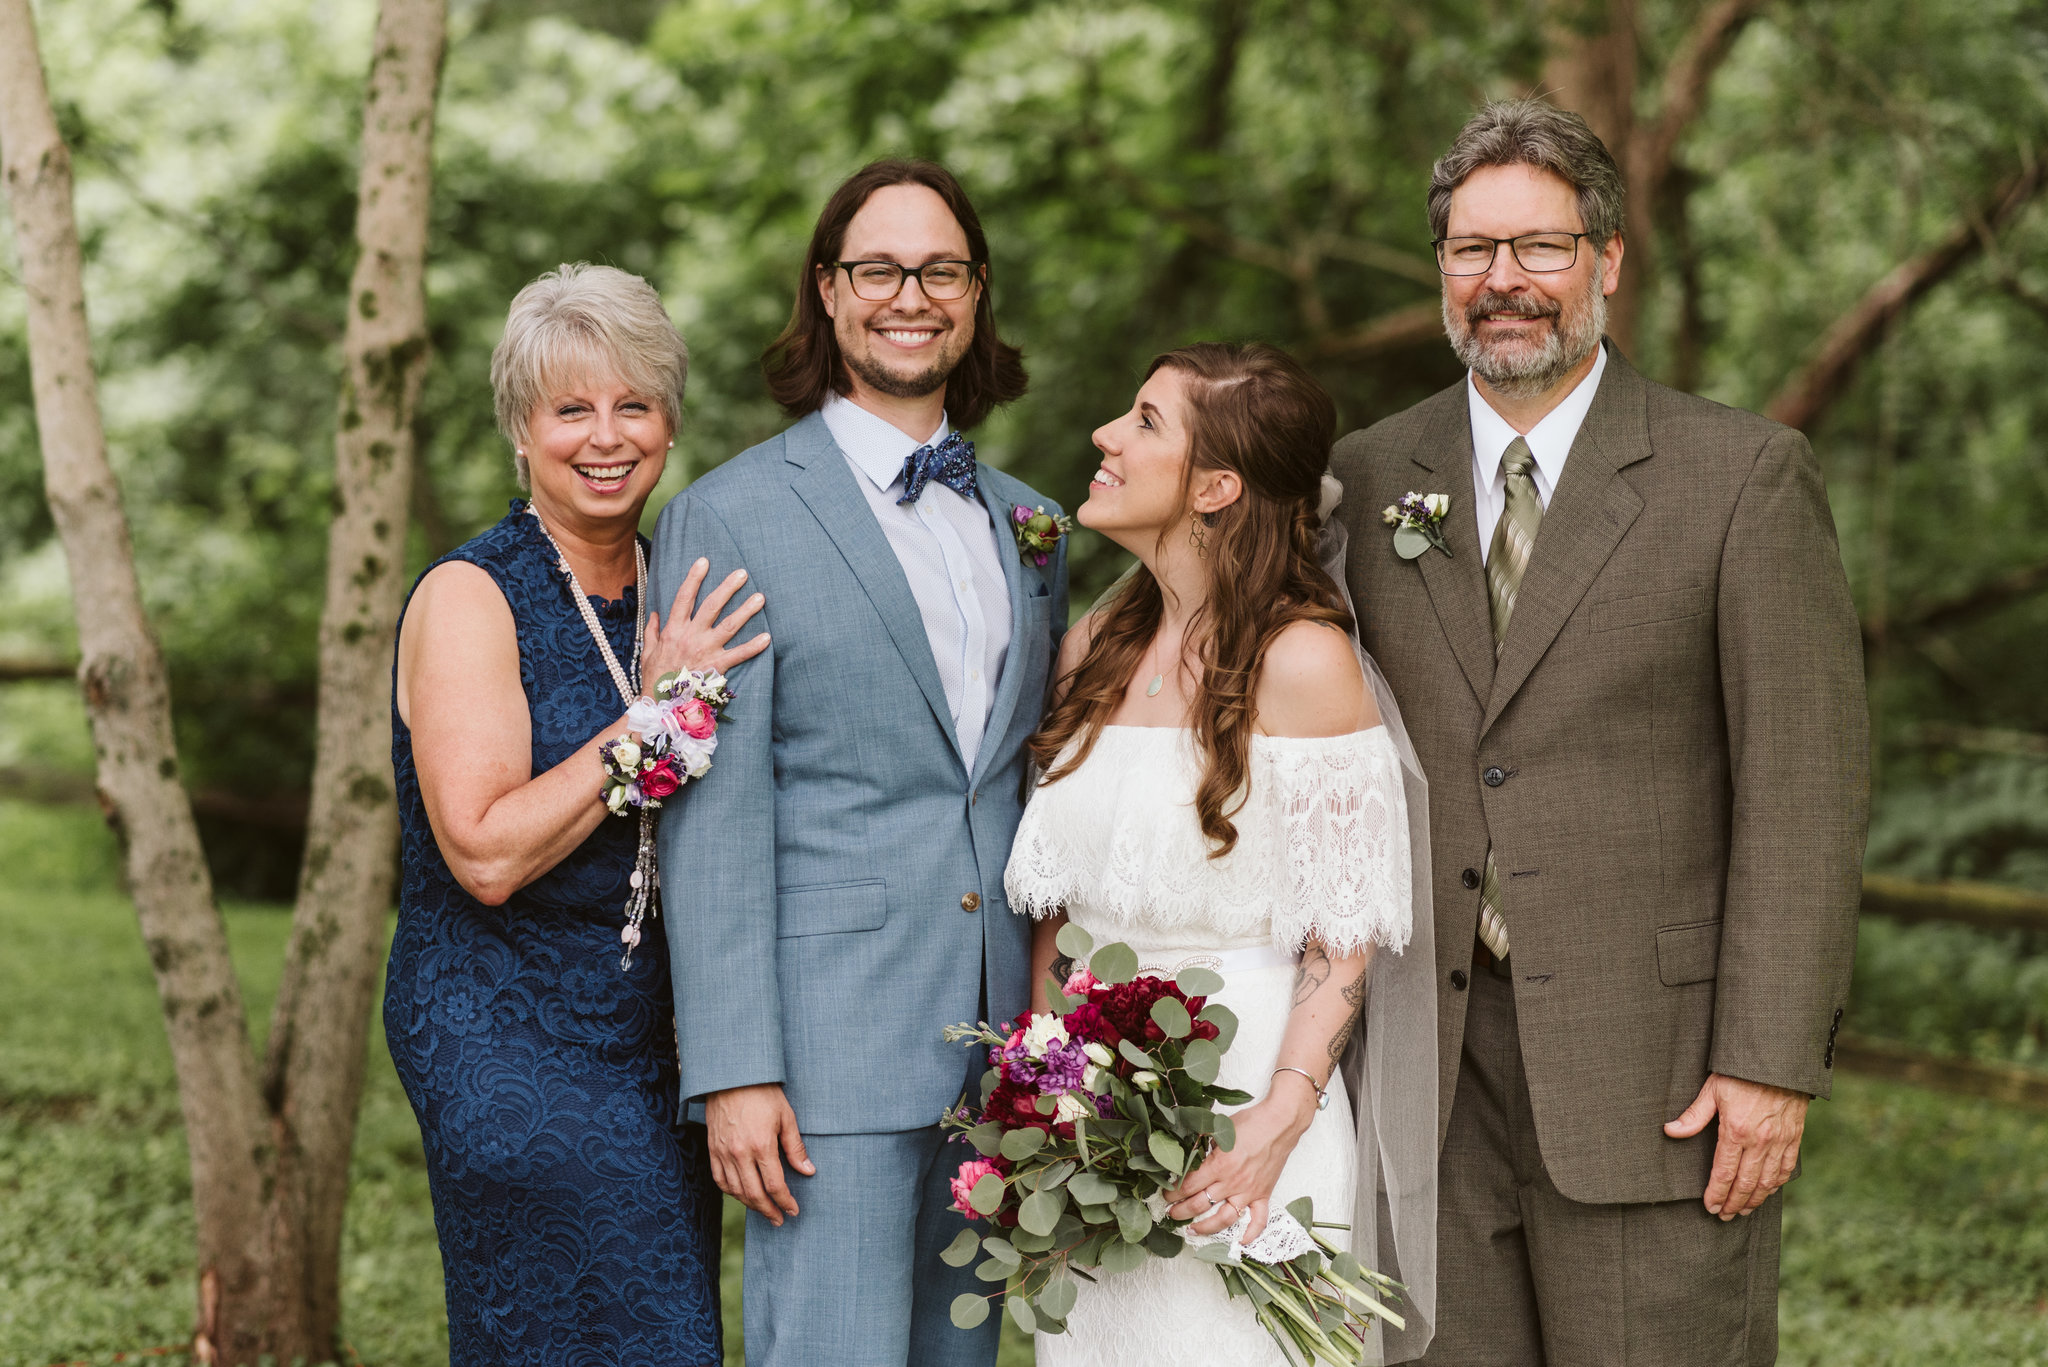  Annapolis, Quaker Wedding, Maryland Wedding Photographer, Intimate, Small Wedding, Vintage, DIY, Bride and Groom with Parents, Portrait Photo 